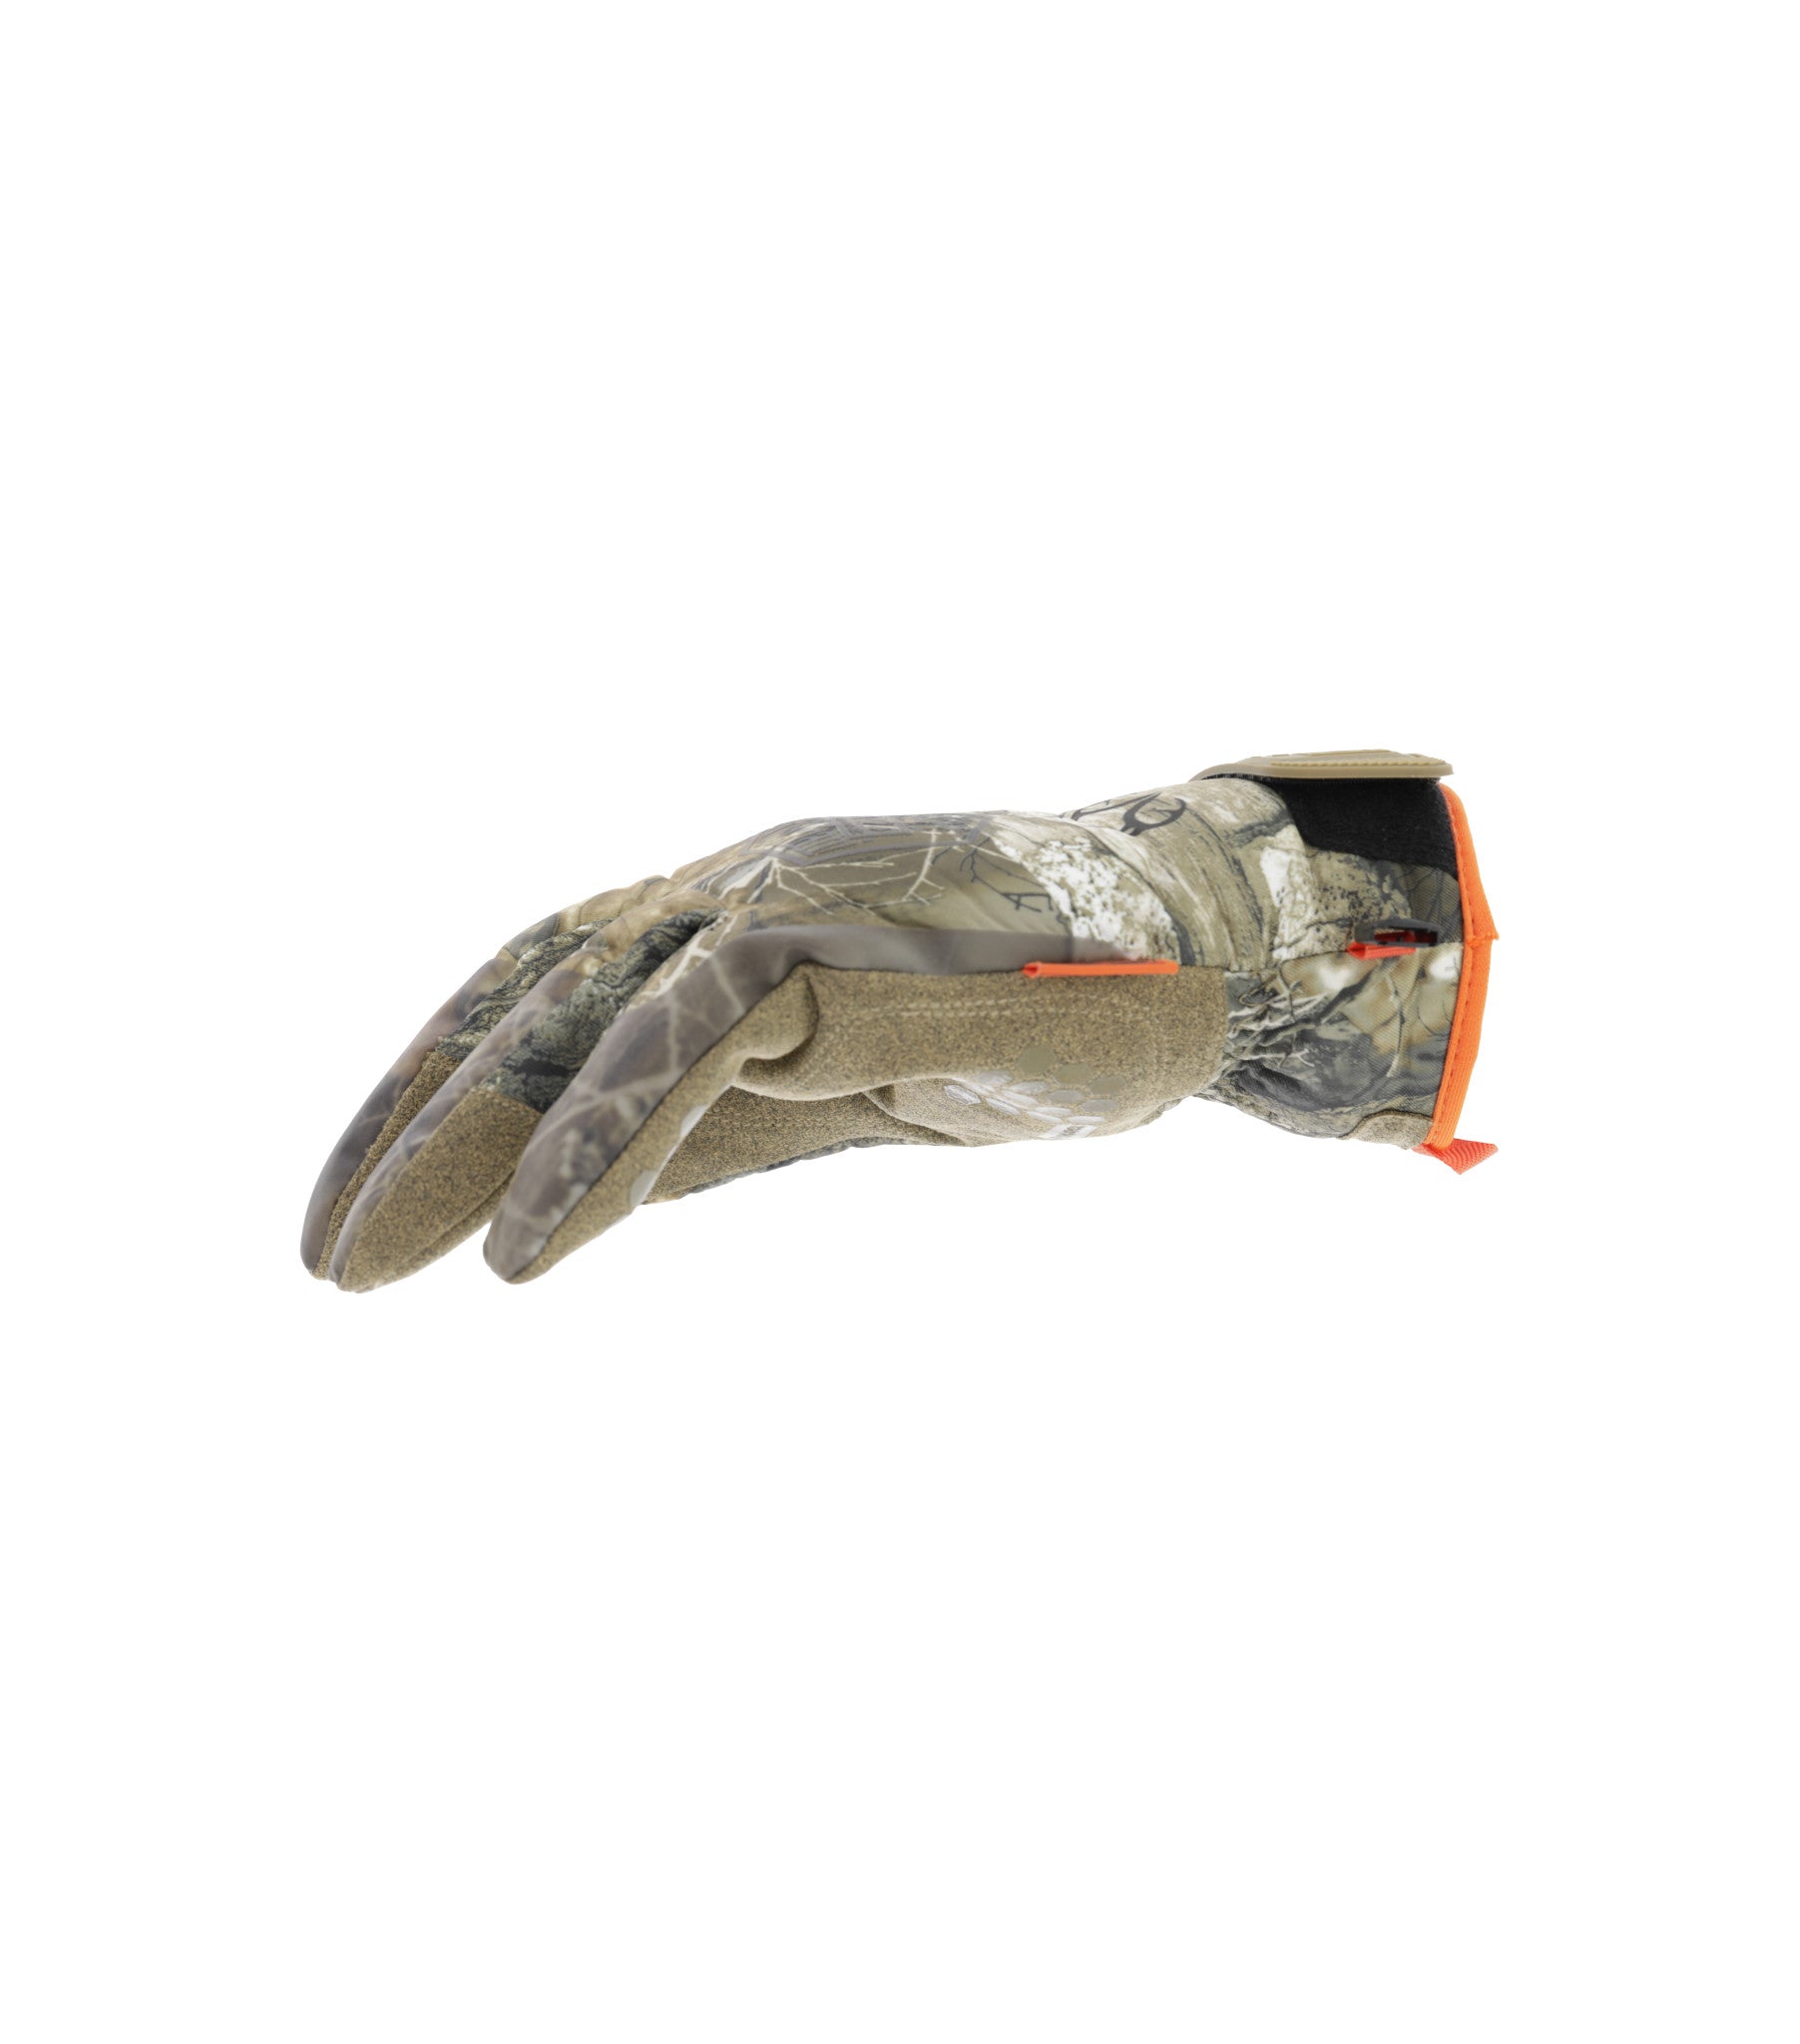 Winter Work Gloves Sub35 Realtree Edge, 4 Pair PDQ Display, Size LG/XL